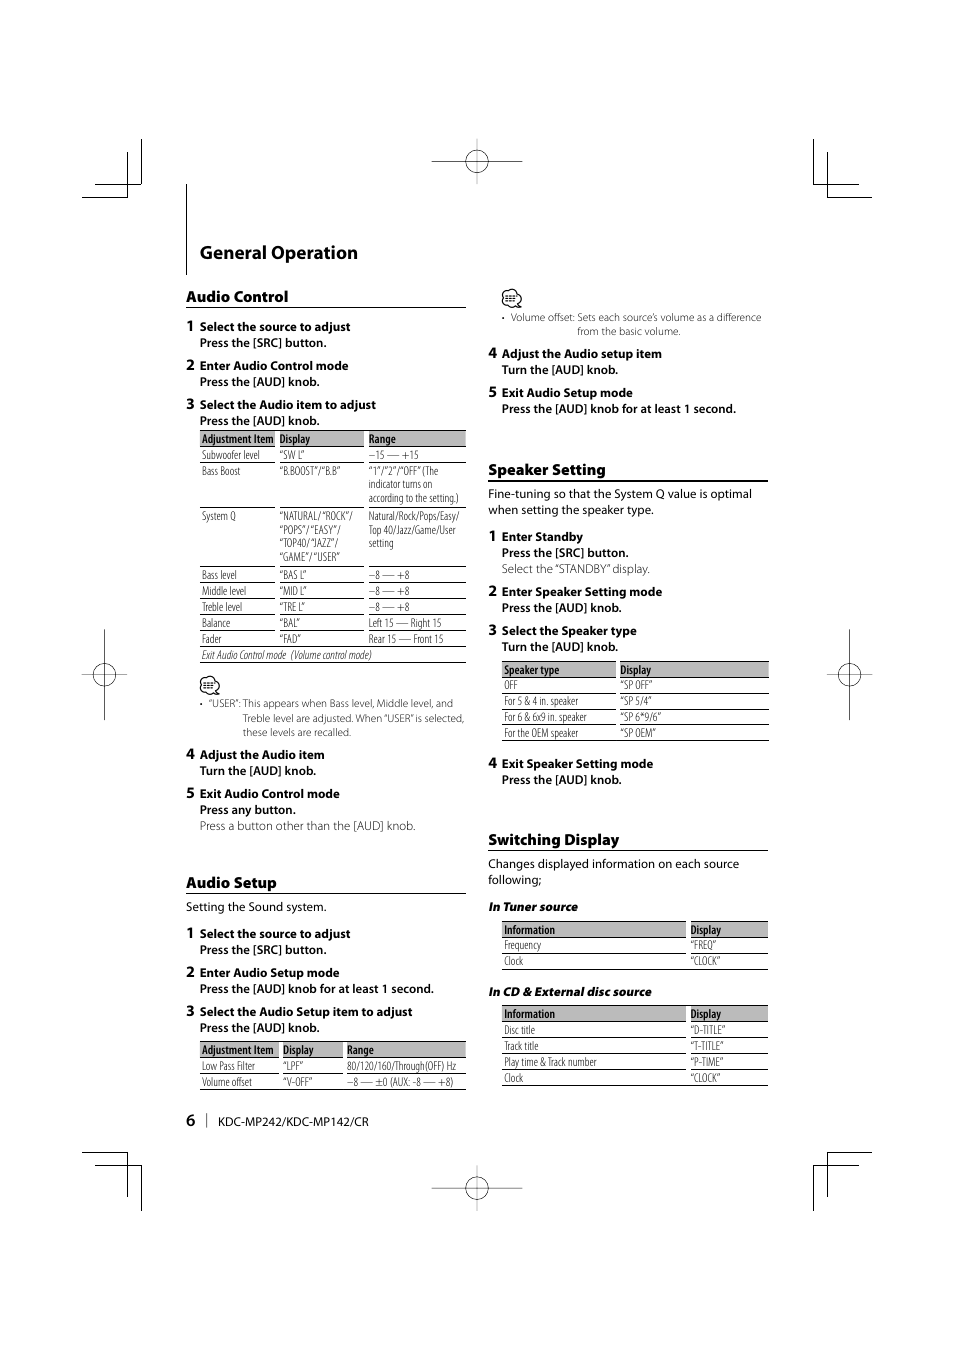 General operation | Kenwood KDC-MP142 User Manual | Page 6 / 56